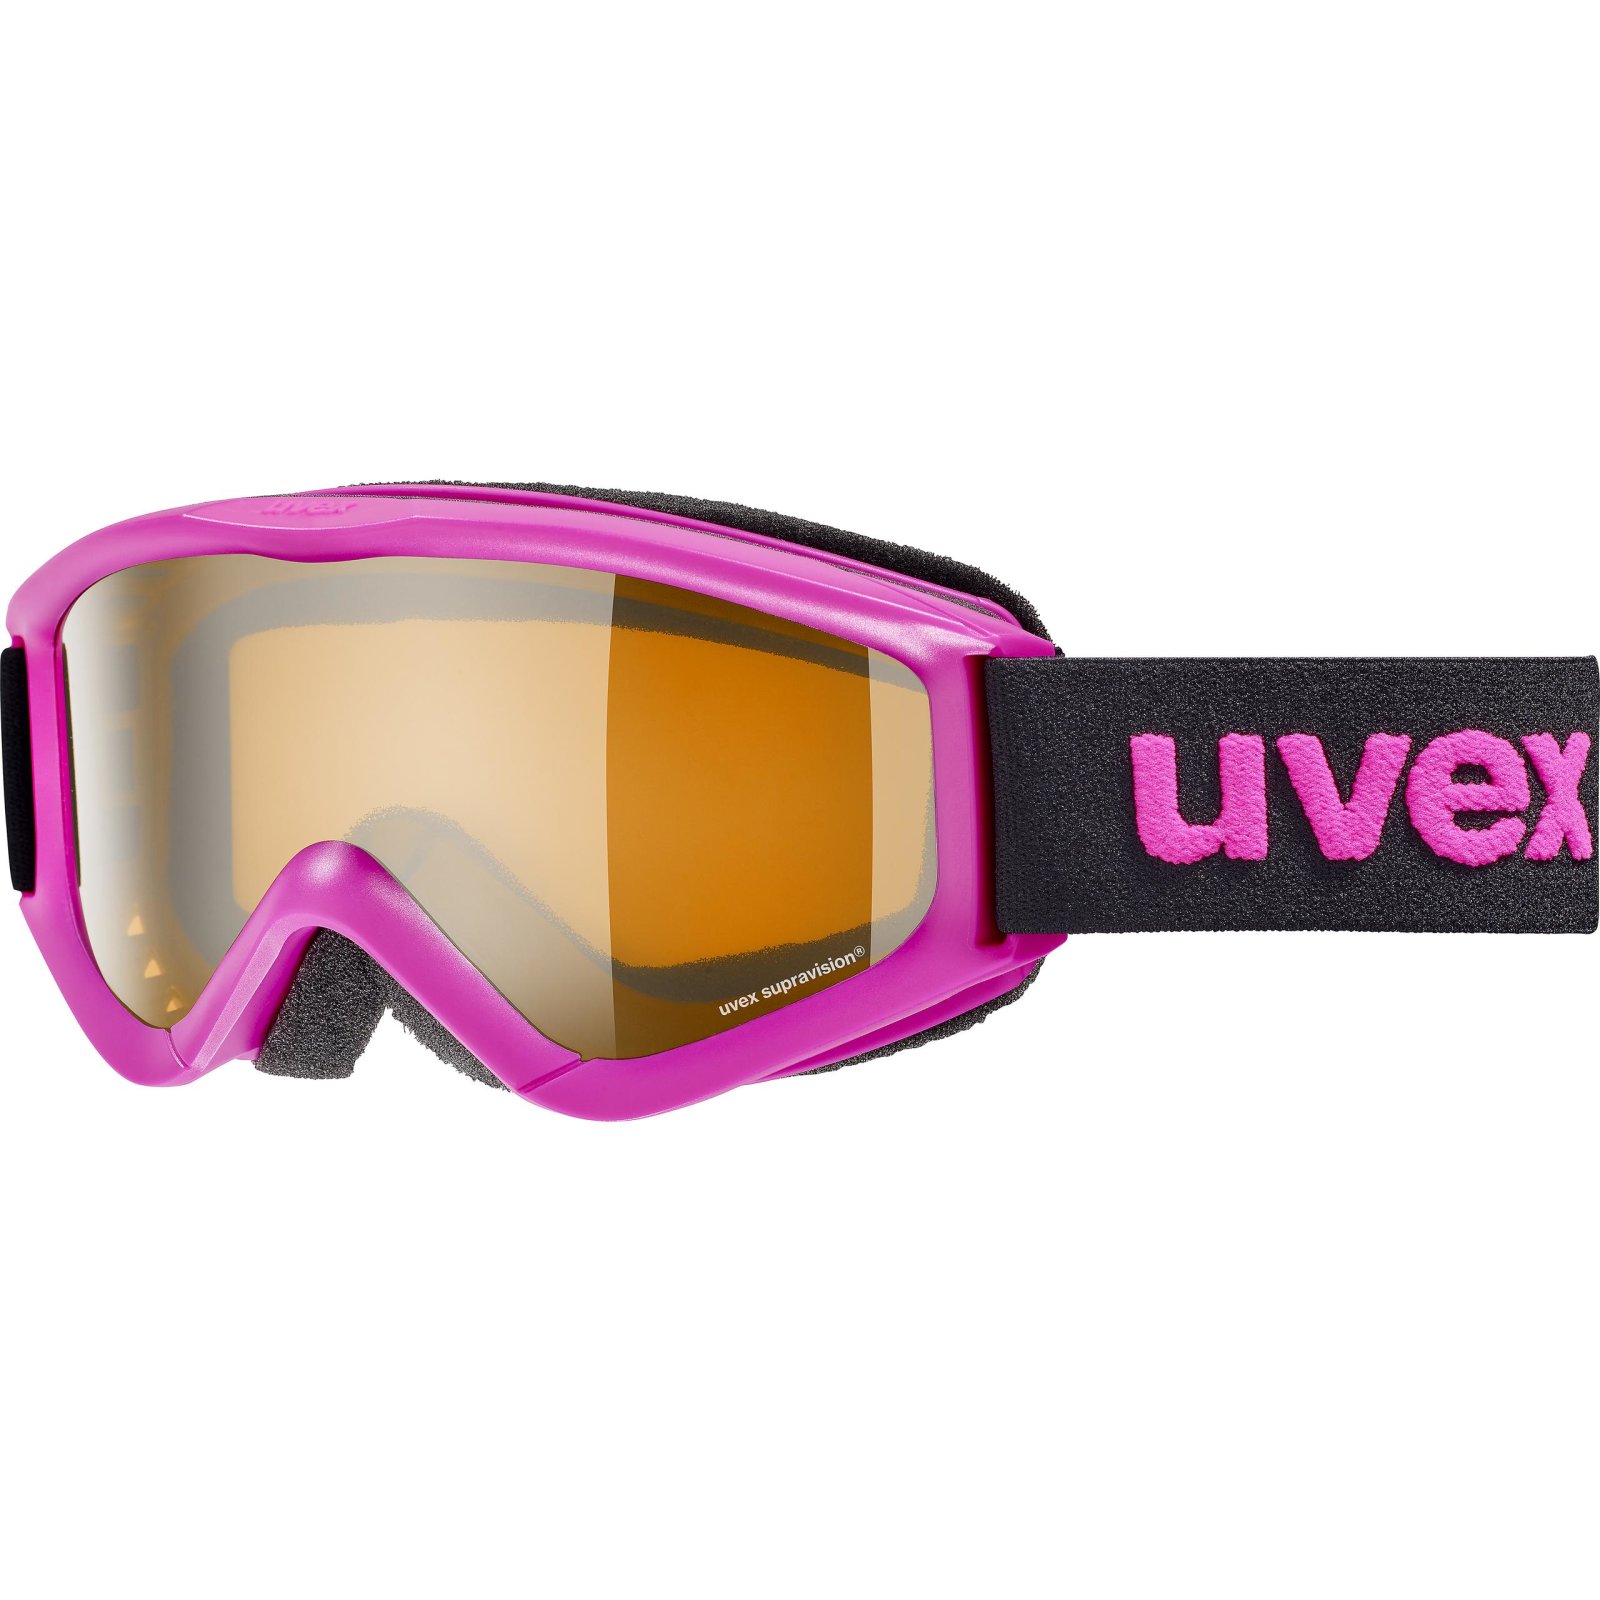 Kids ski goggles UVEX speedy pro 20/21